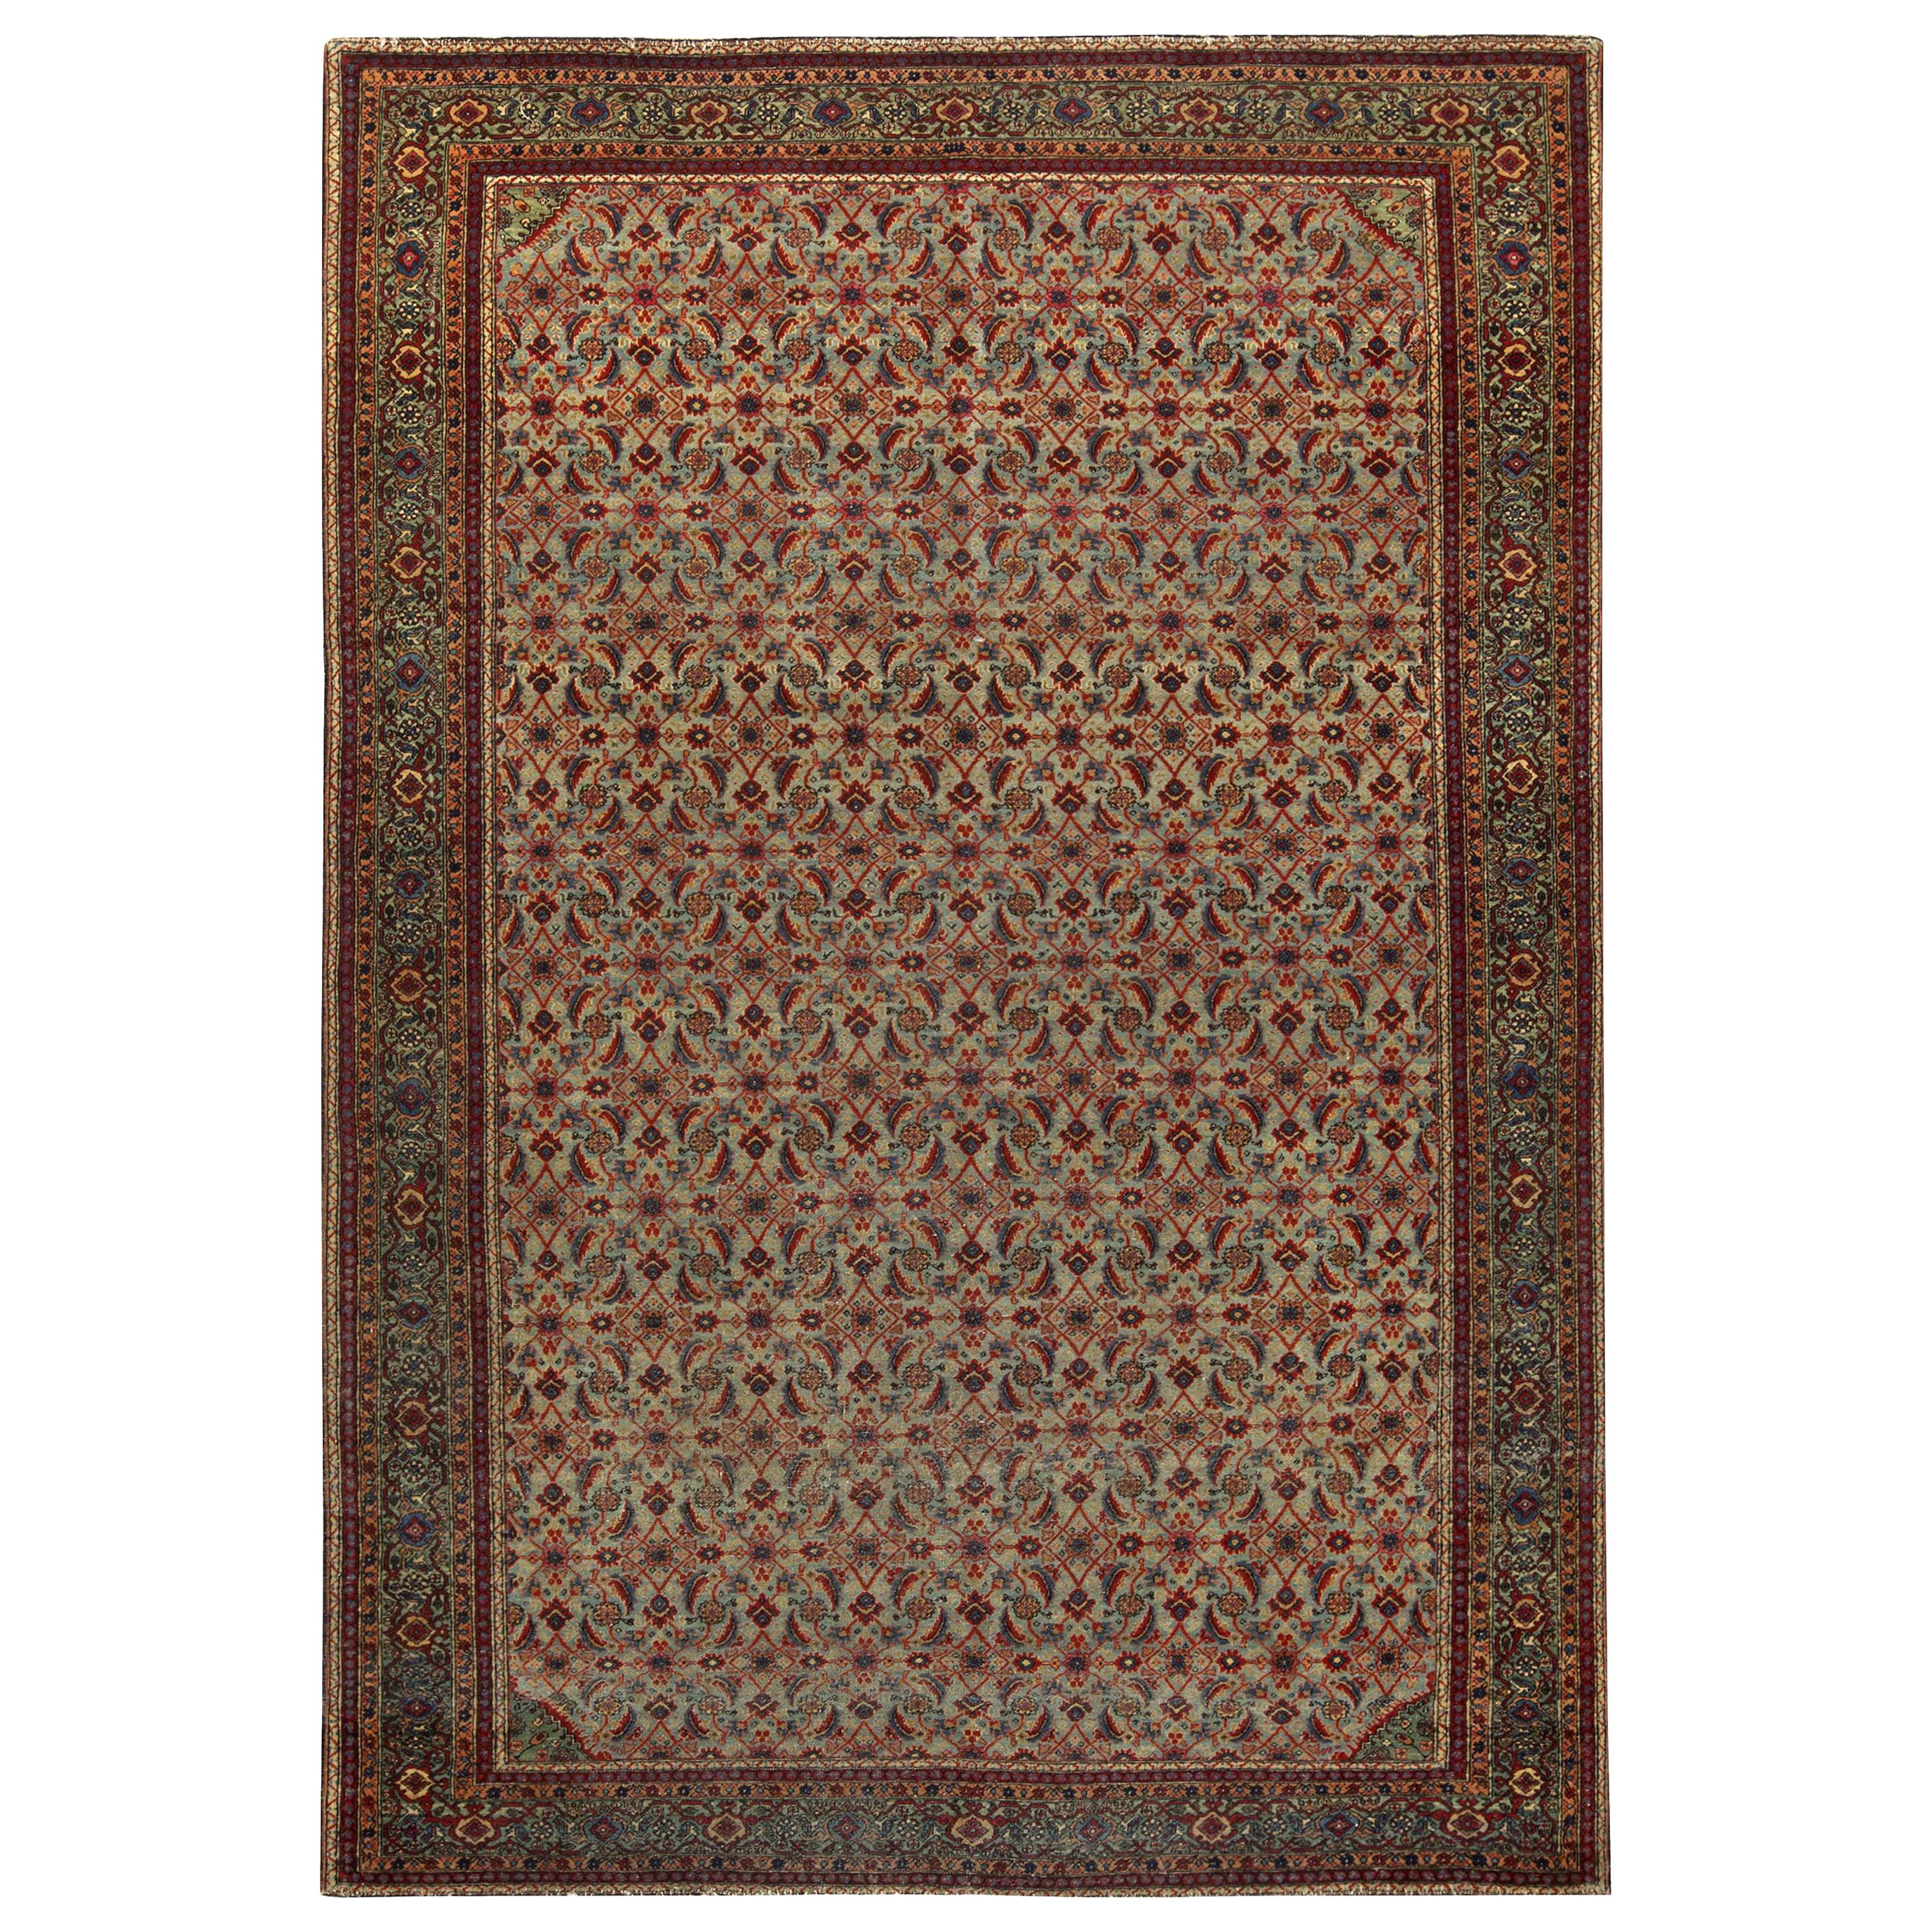 19th Century Persian Tabriz Handmade Wool Rug